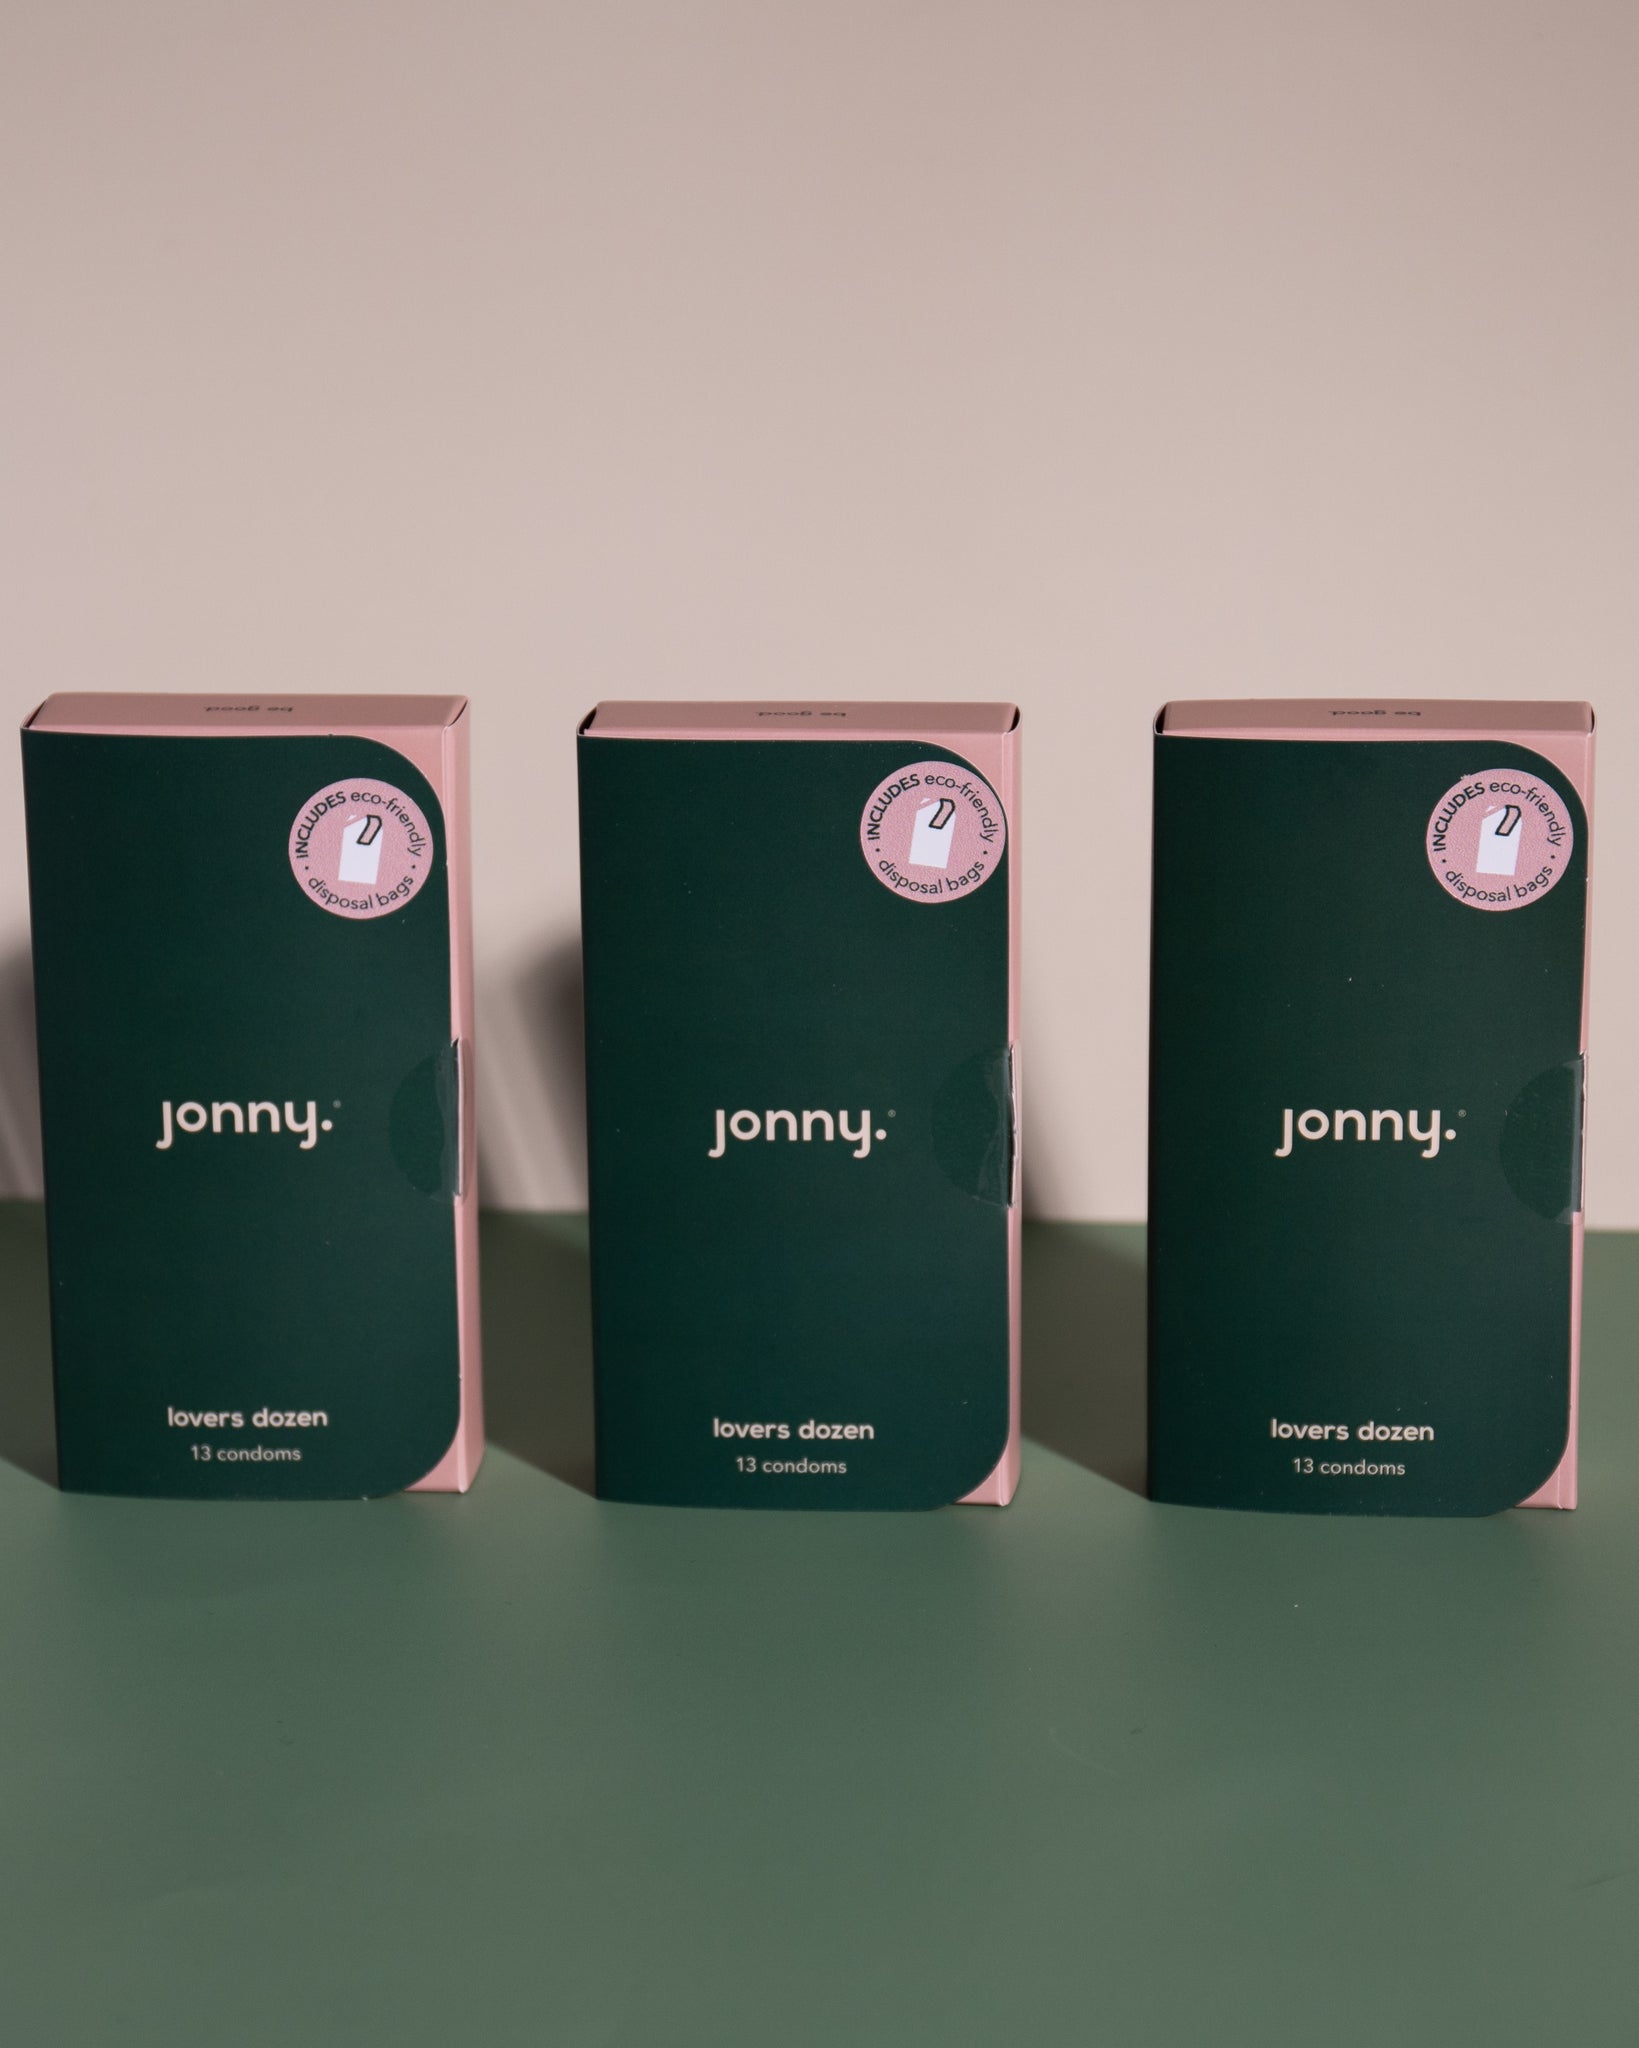 Meet Jonny - A Natural Latex Condom